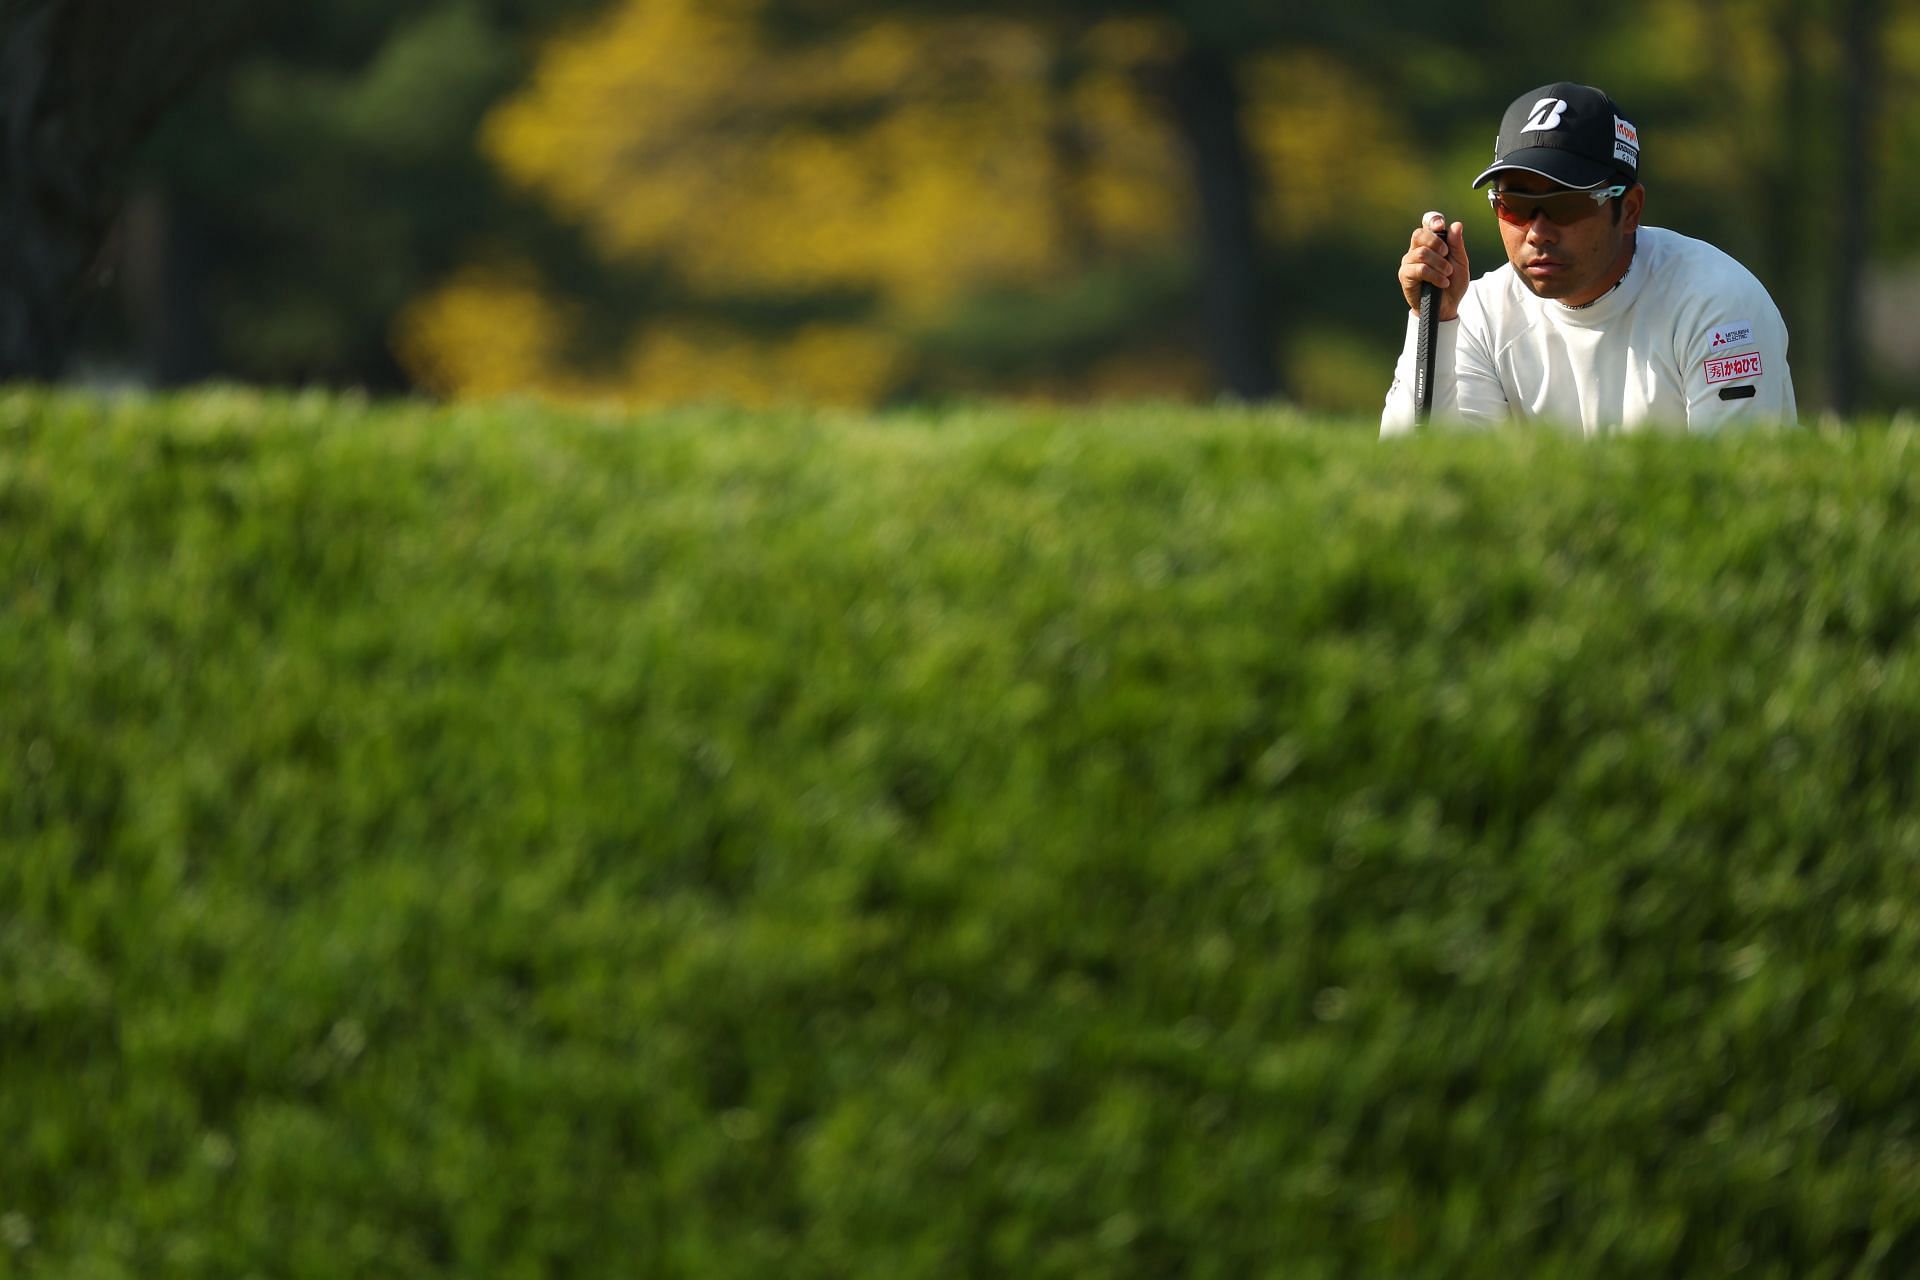 Kazuki Higa getting ready for putting a birdie at the 12th hole. 2023 PGA Championship (Image via Getty).